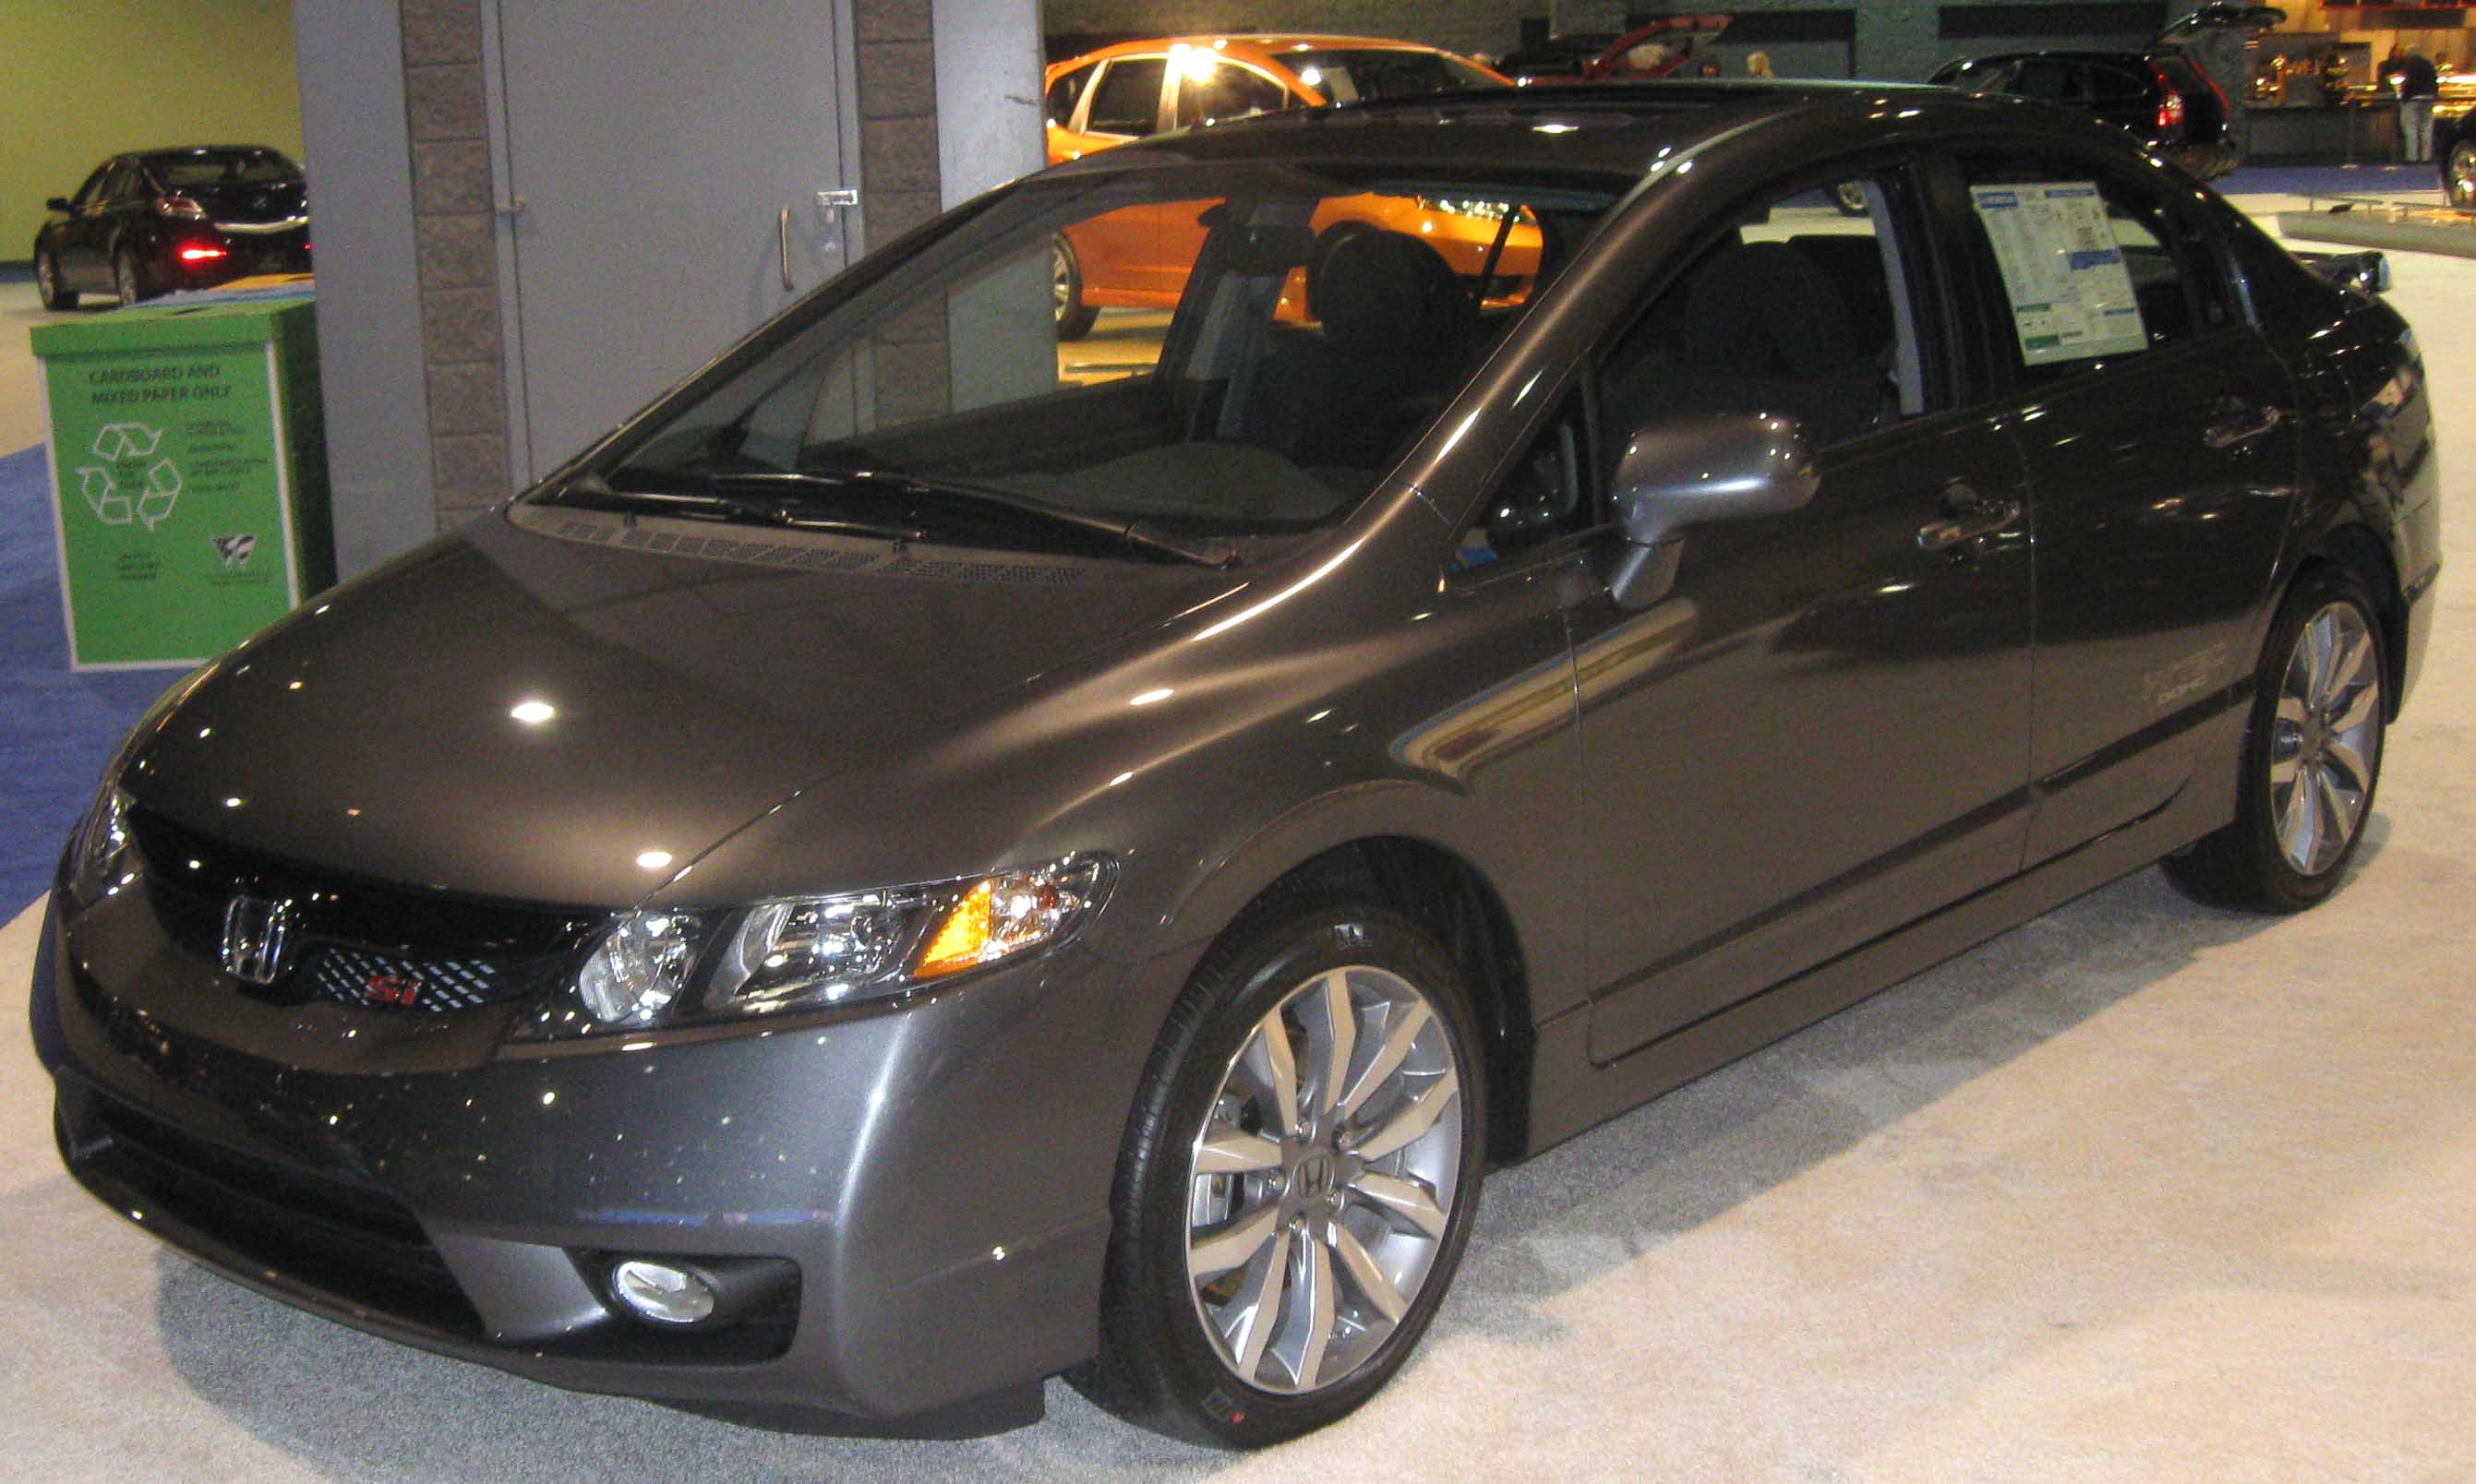 File:2009 Honda Civic Si sedan--DC.jpg - Wikipedia